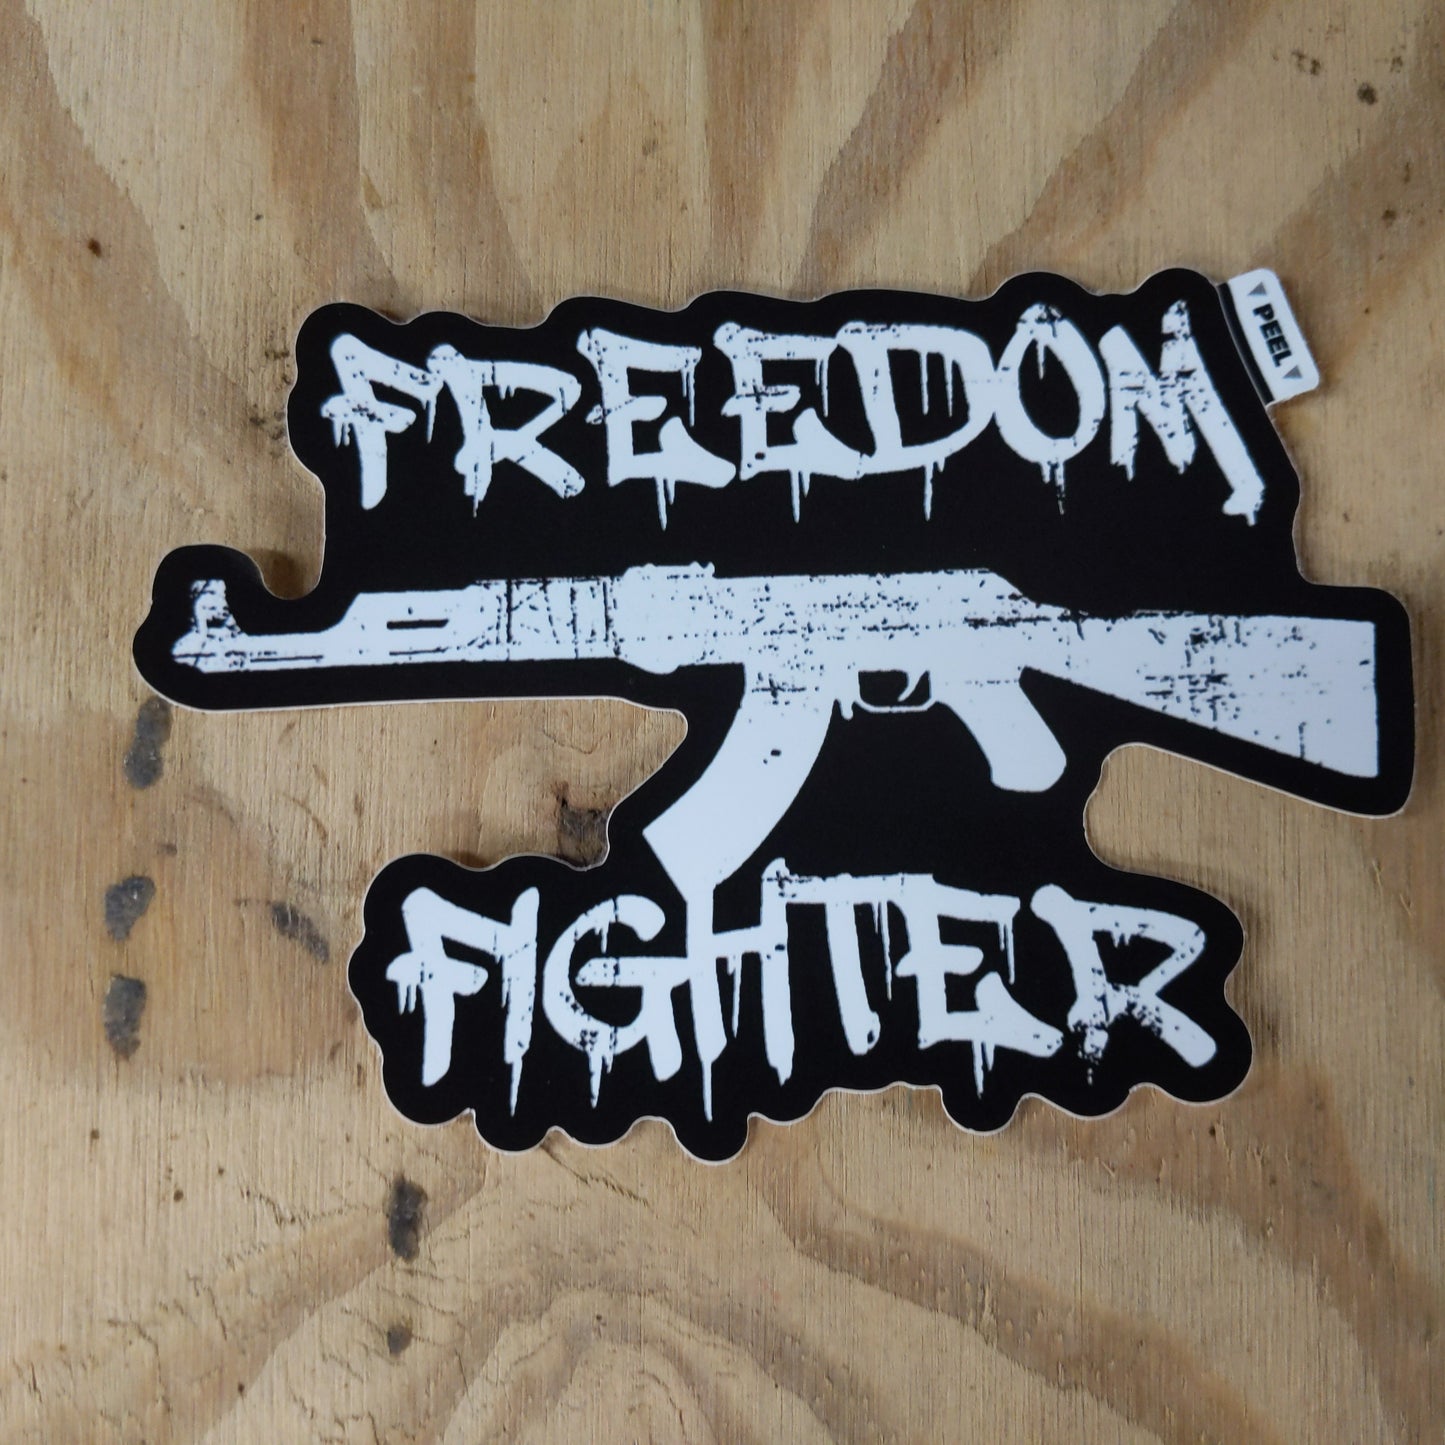 Freedom Fighter Graffiti Decal